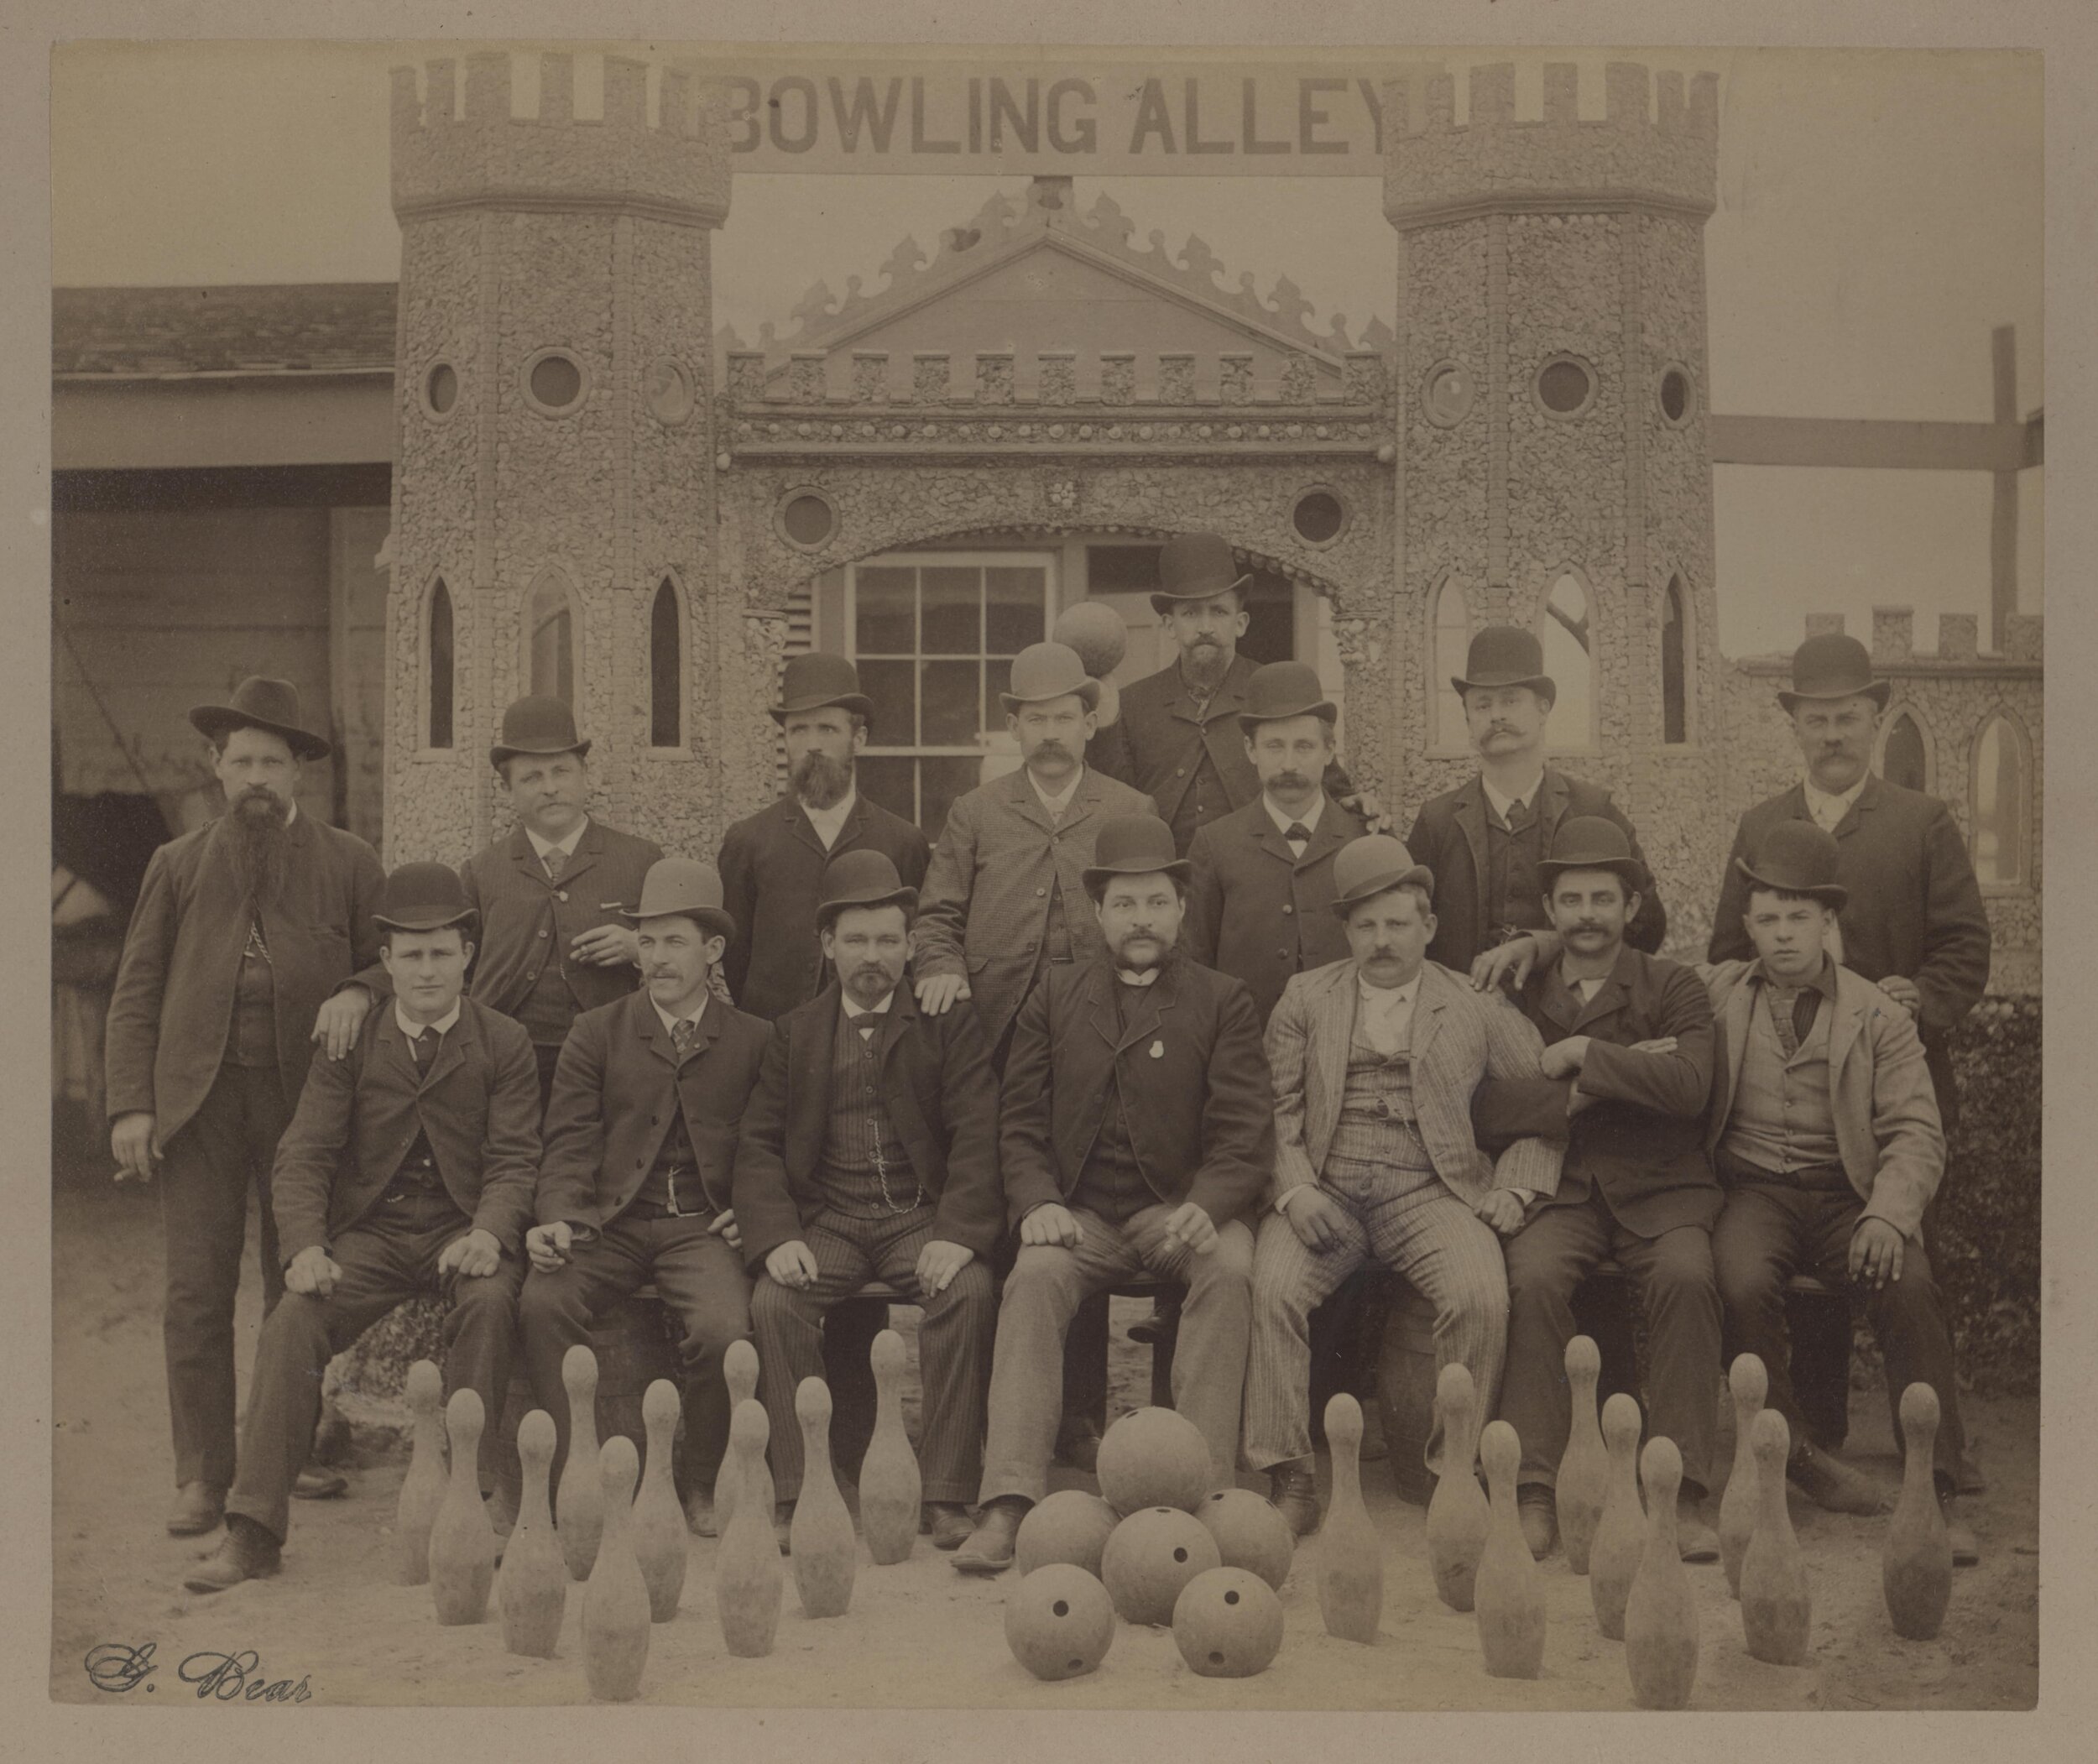 Bowling club group portrait, photo by George Bear, ca. 1885-1895 (Copy)